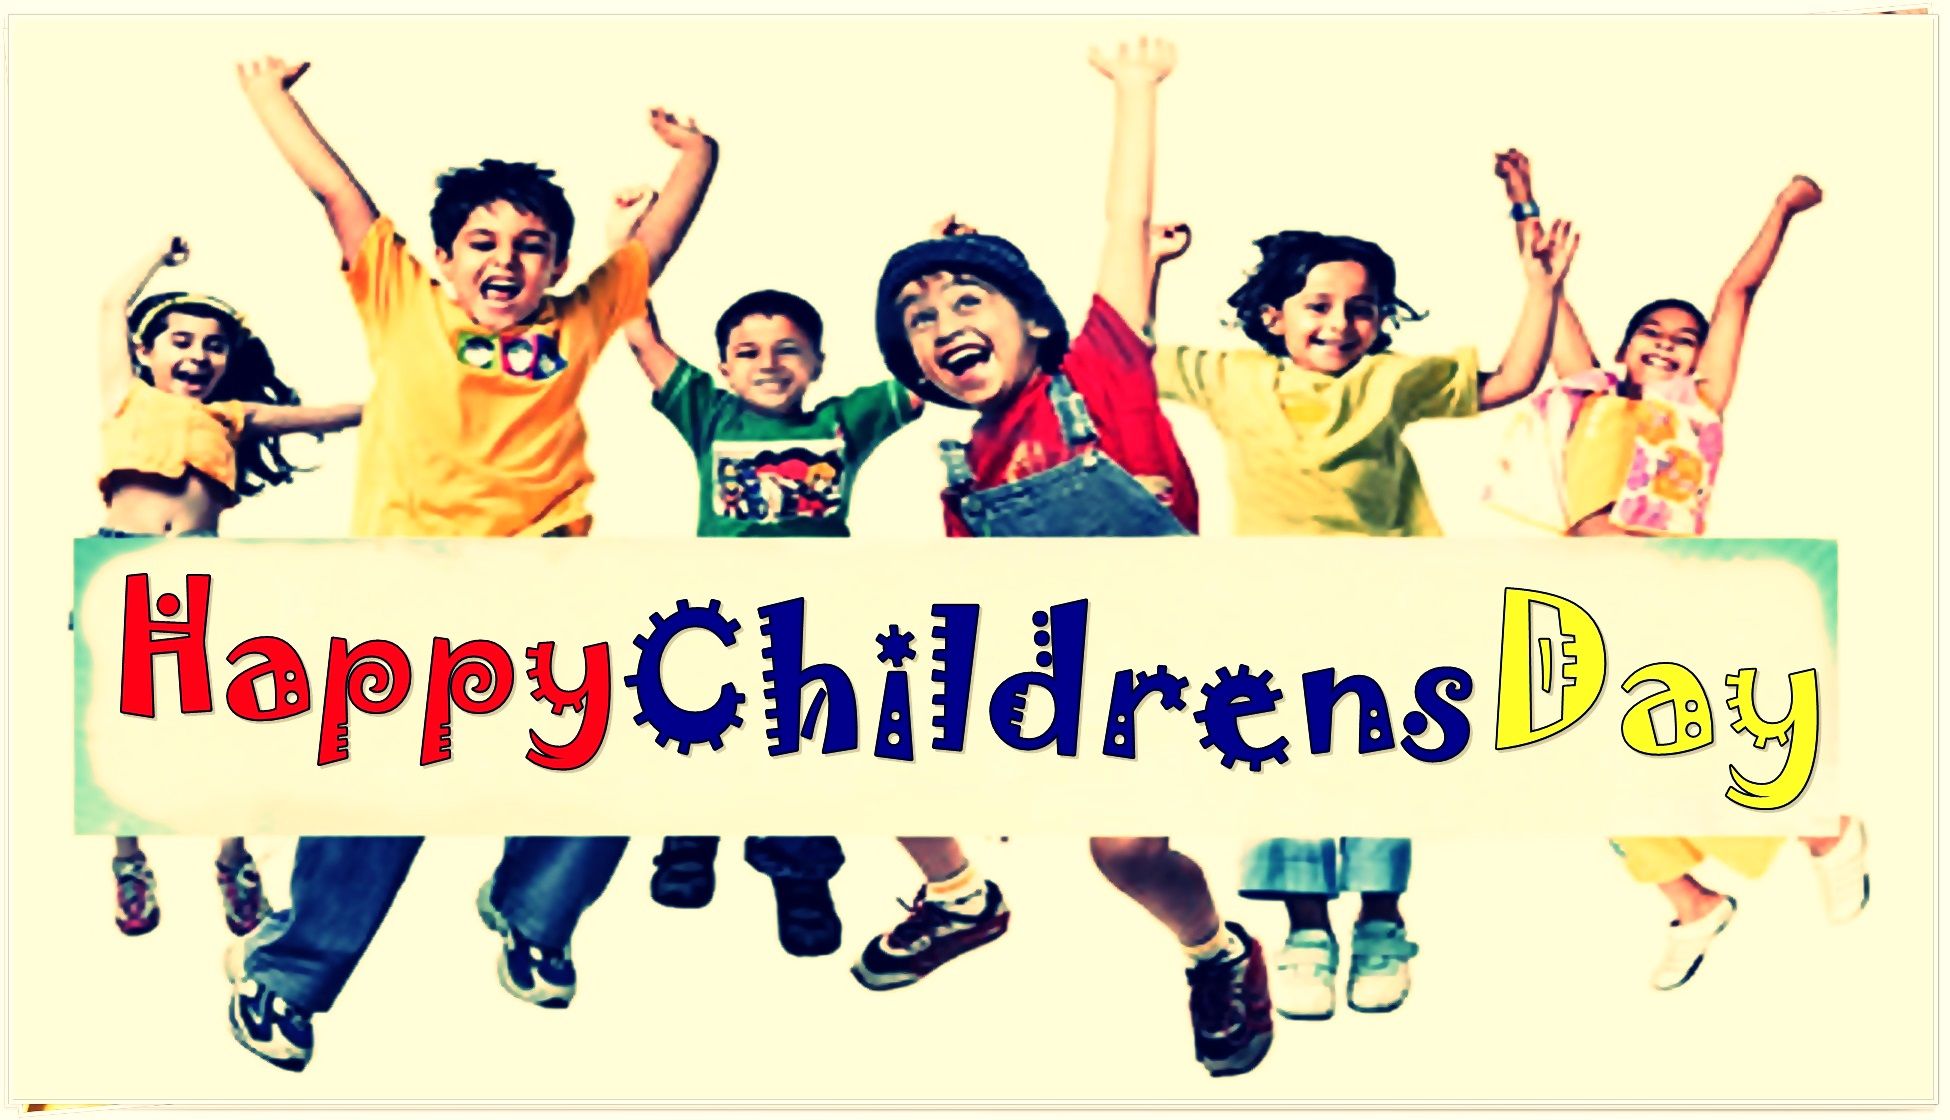 Happy Childrens Day Nov. Childrens day quotes, Happy friends image, Children's day slogans